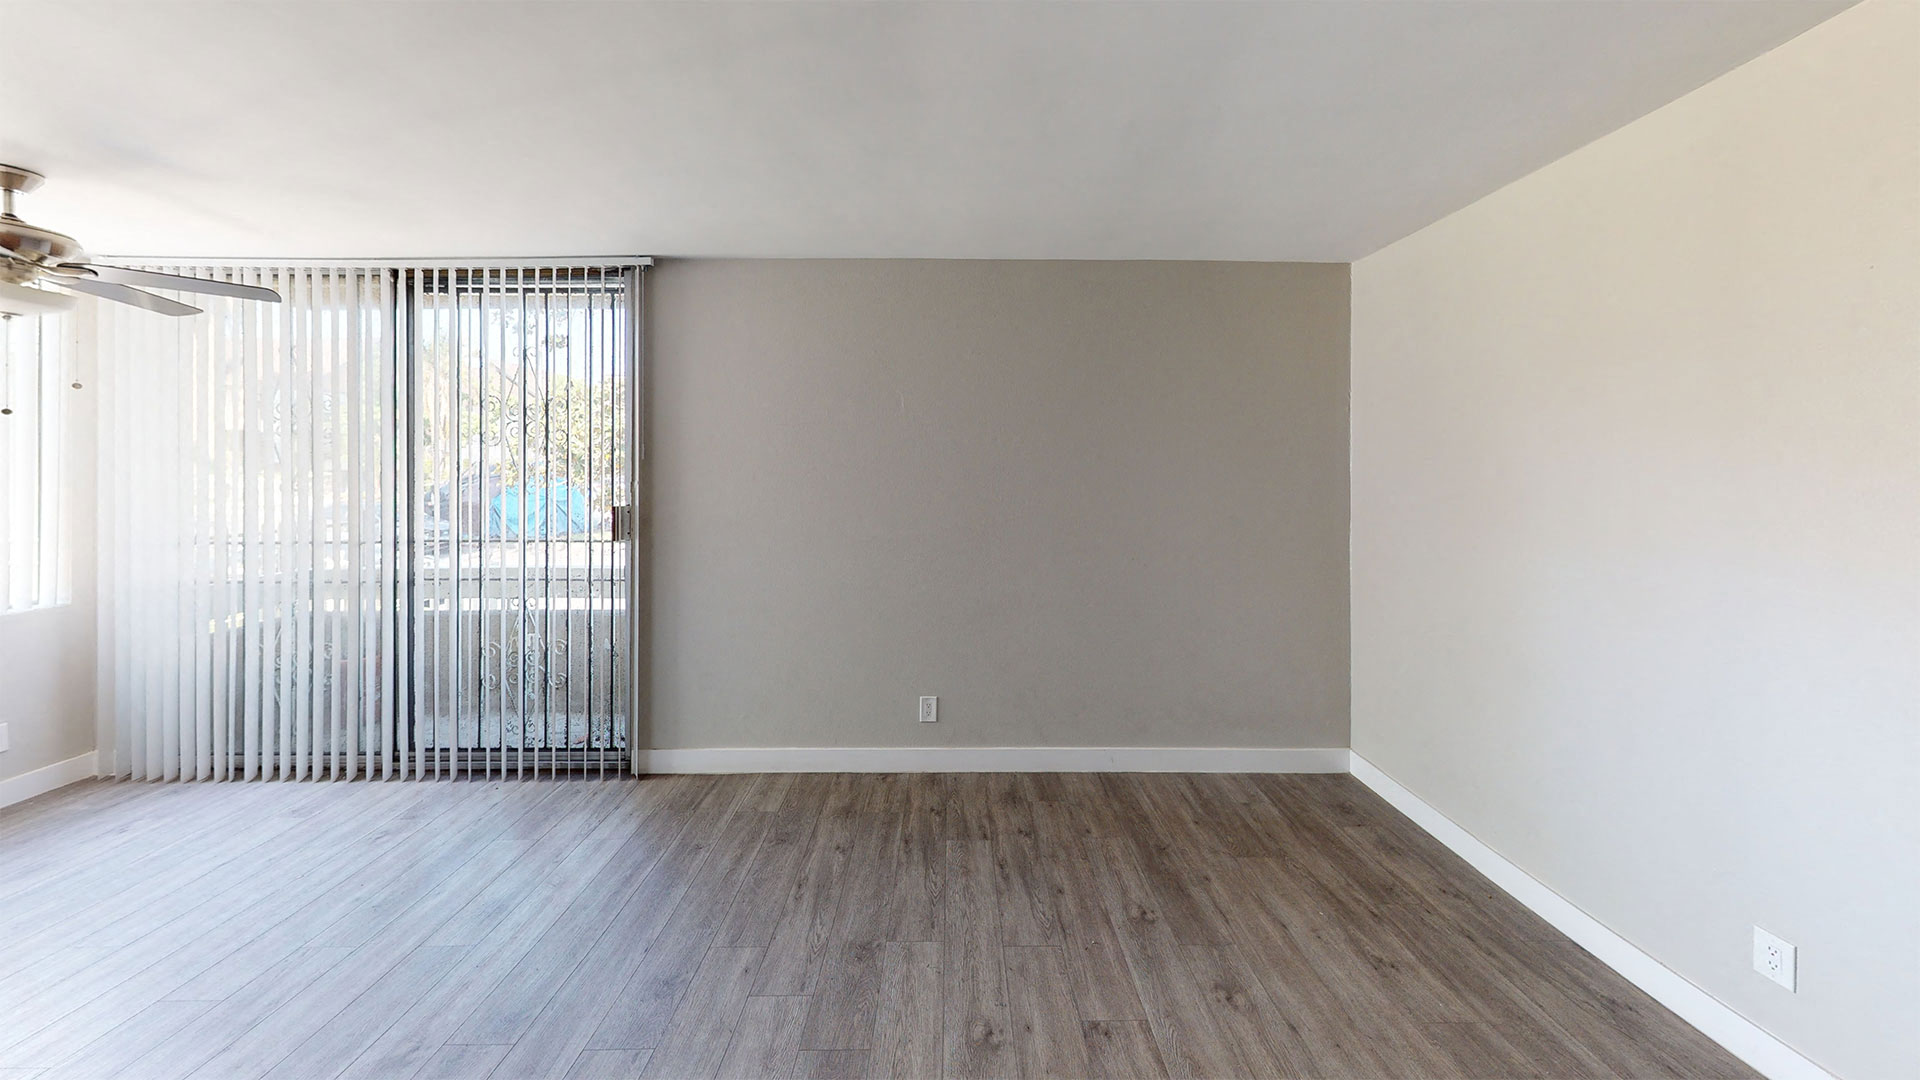 1BDR-LivingRoom at Occidental Apartments, California, 90057